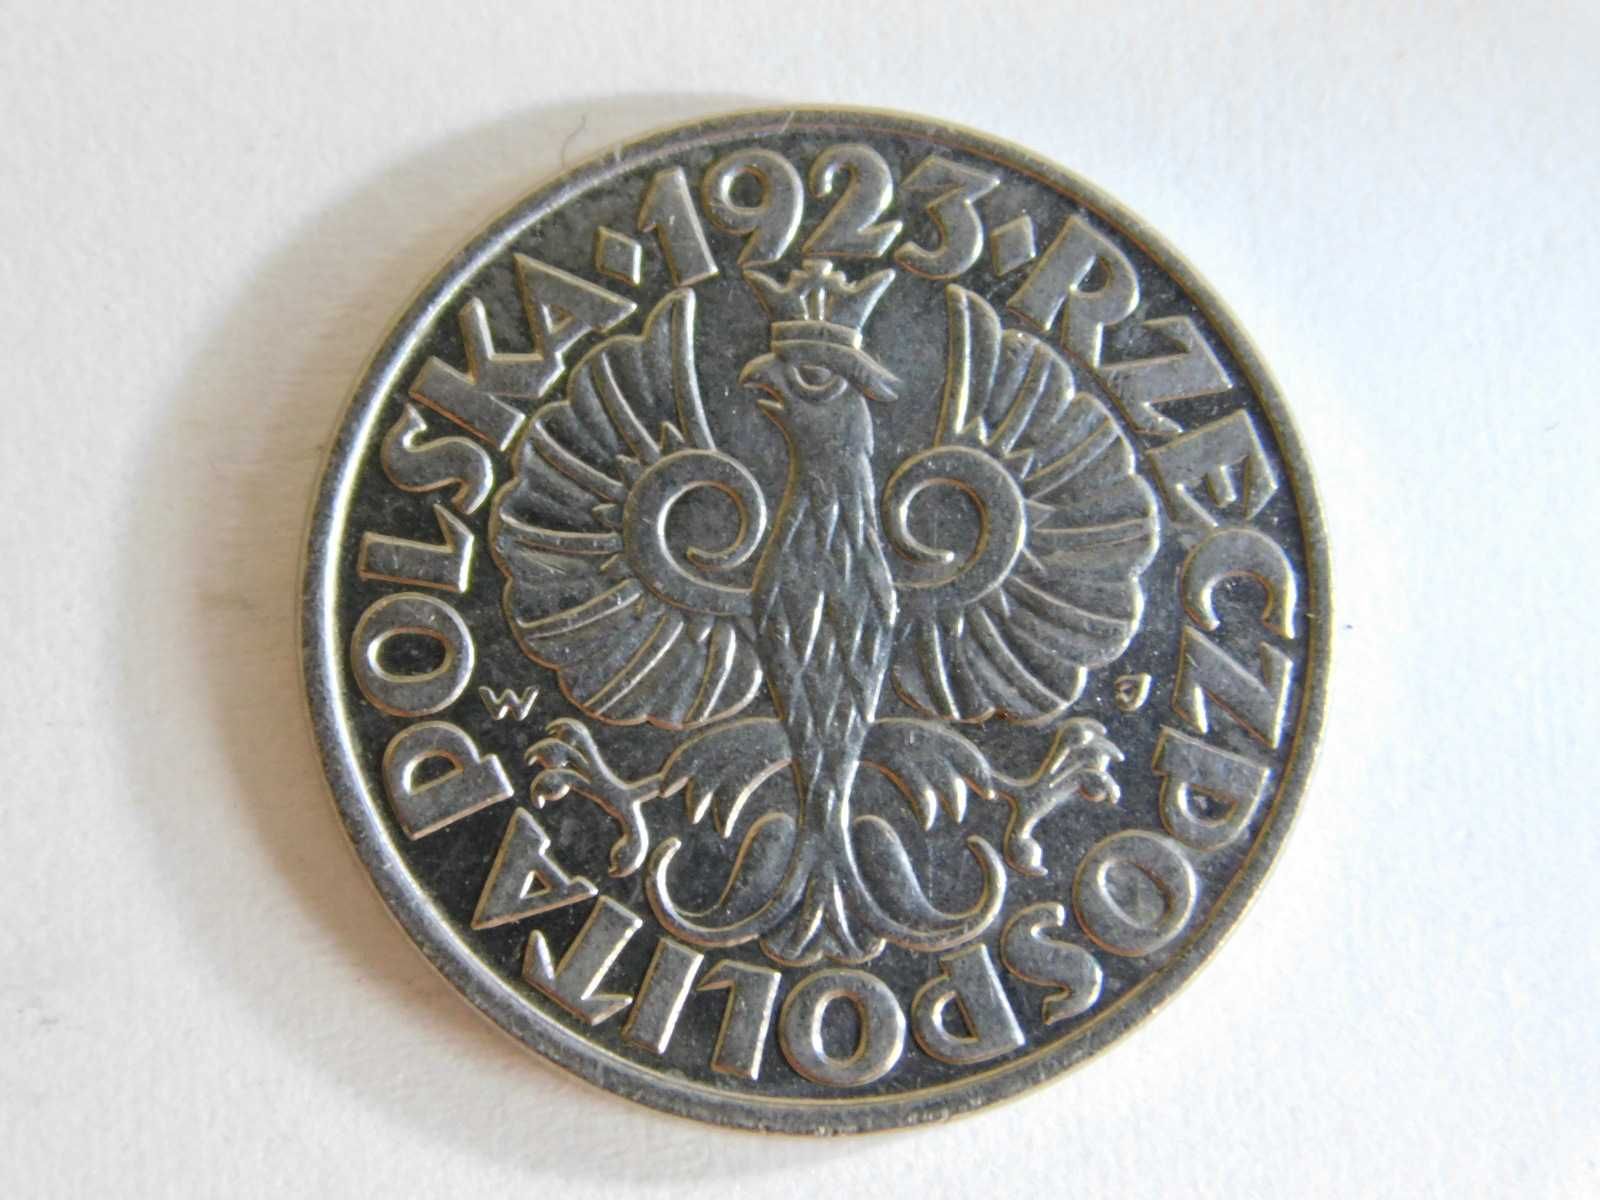 20 groszy 1923 mennicze MS66/67